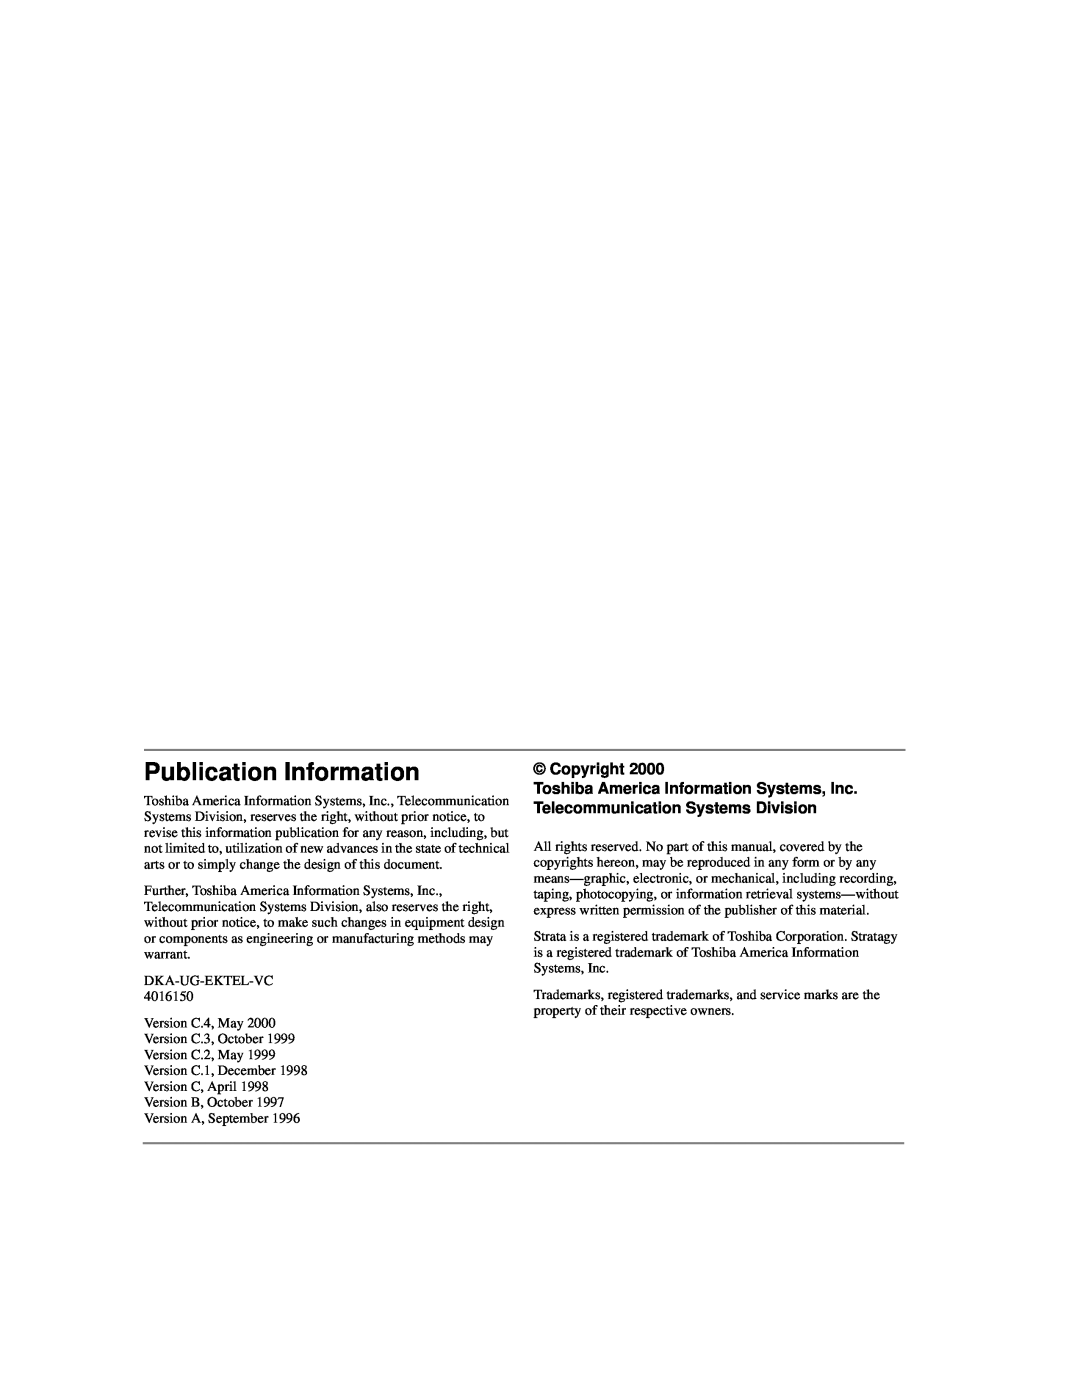 Toshiba Strata DK manual Publication Information 